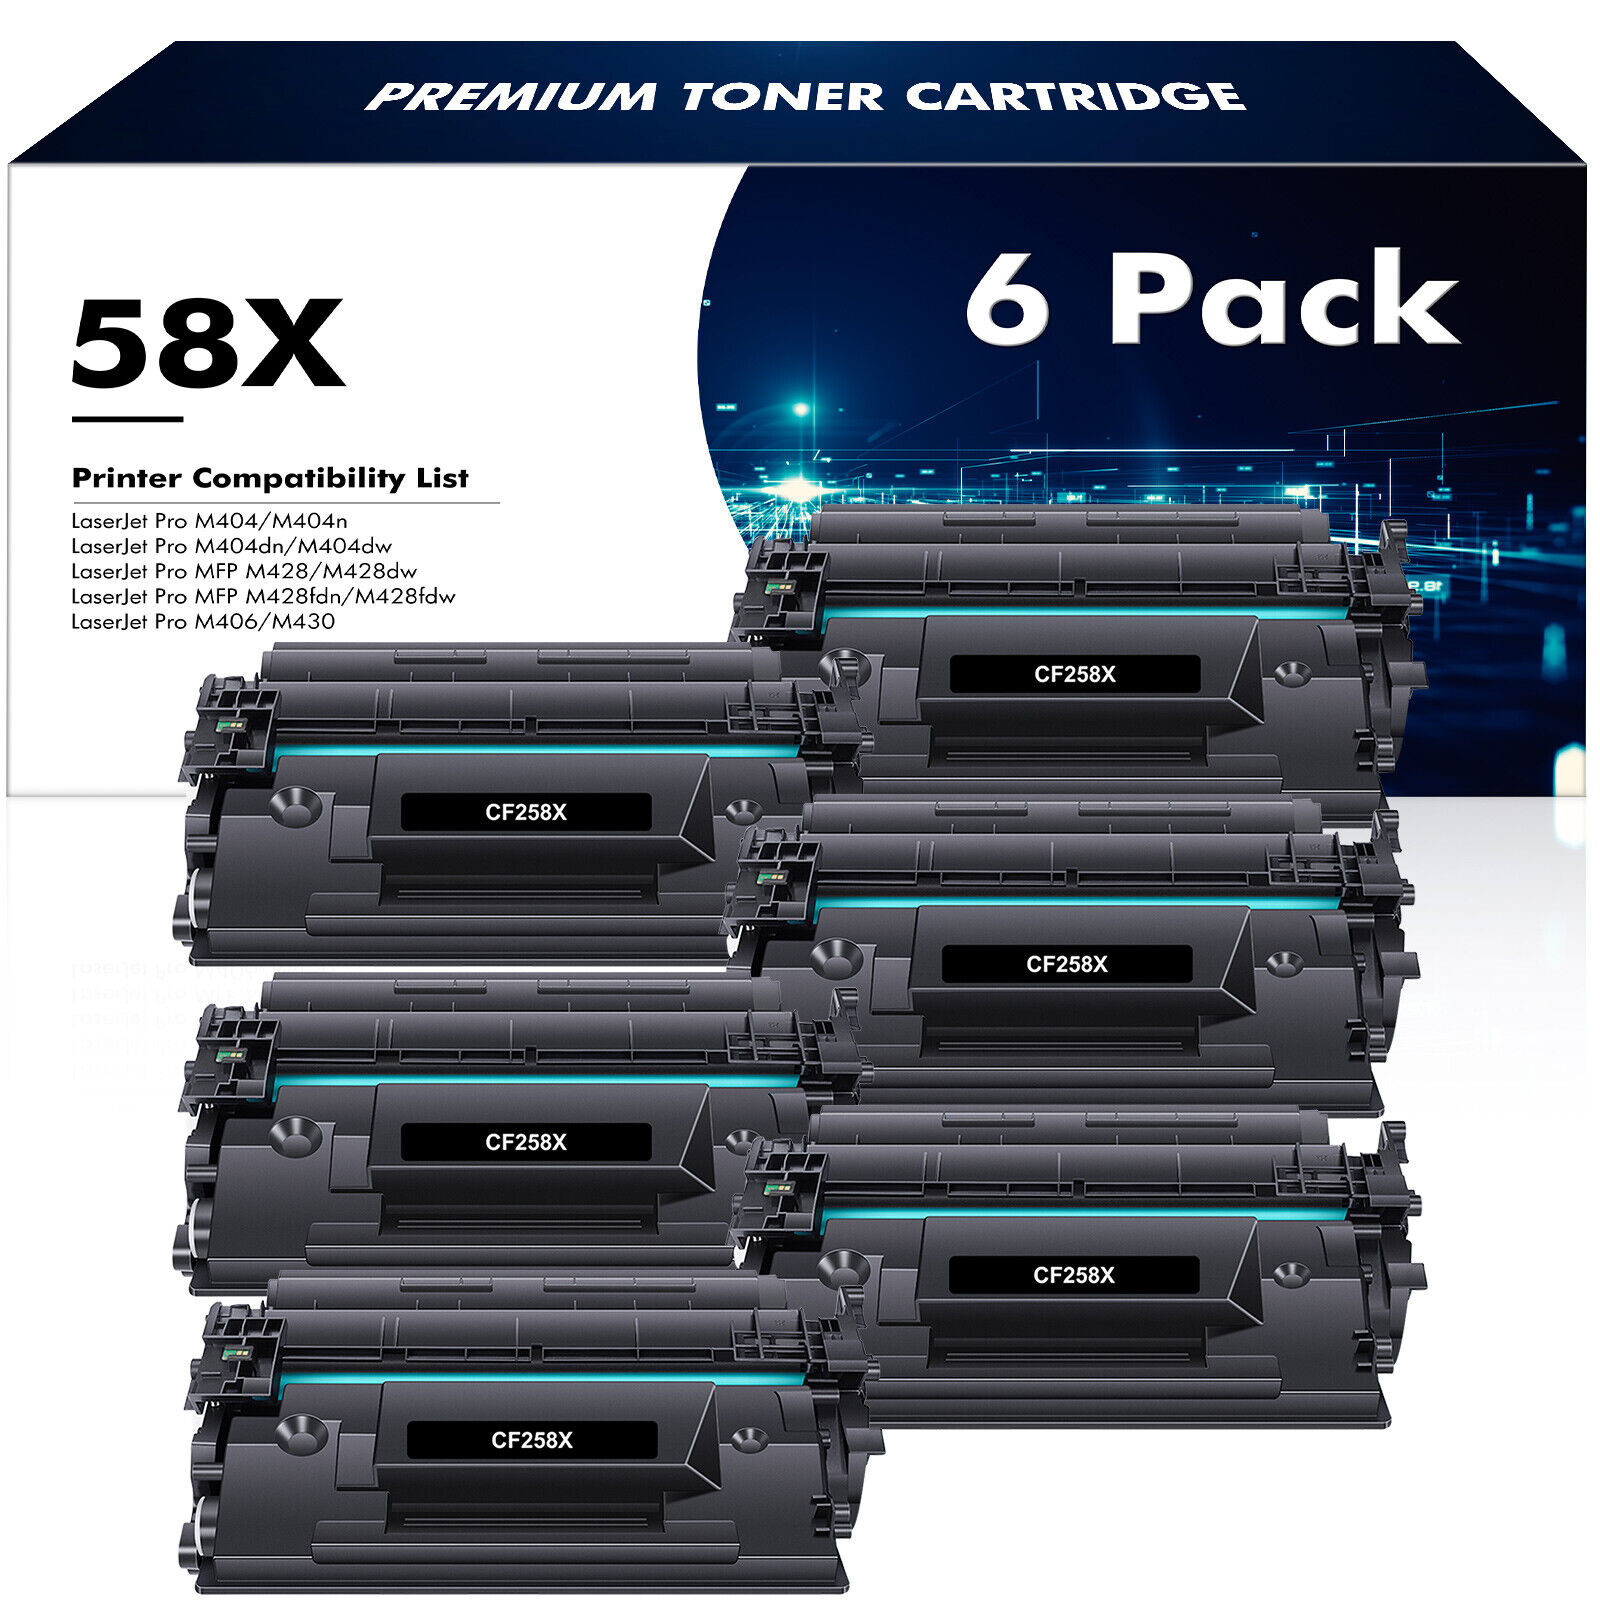 6PK CF258X 58X Toner Compatible With HP LaserJet Pro M404dn MFP M428fdw NO CHIP